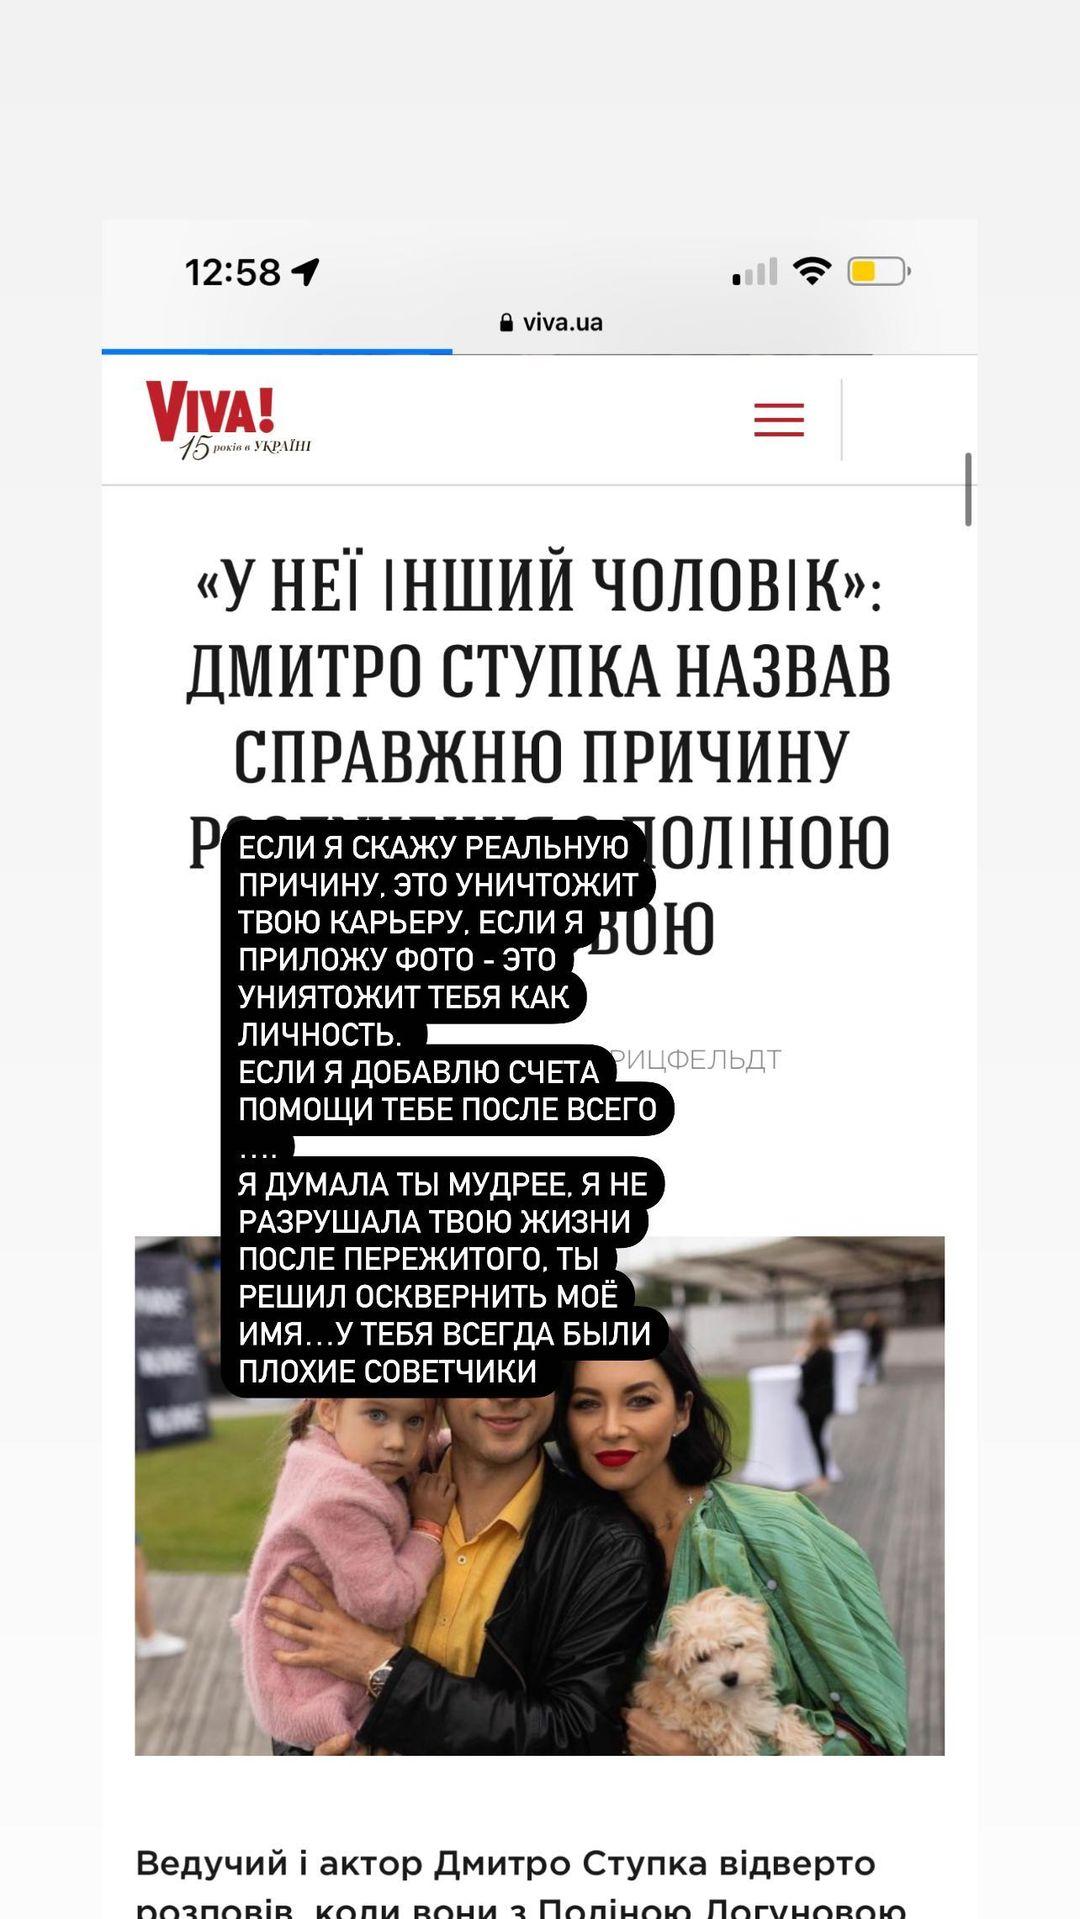 Polina Logunova replied to Stupka / instagram.com/polinalogunova